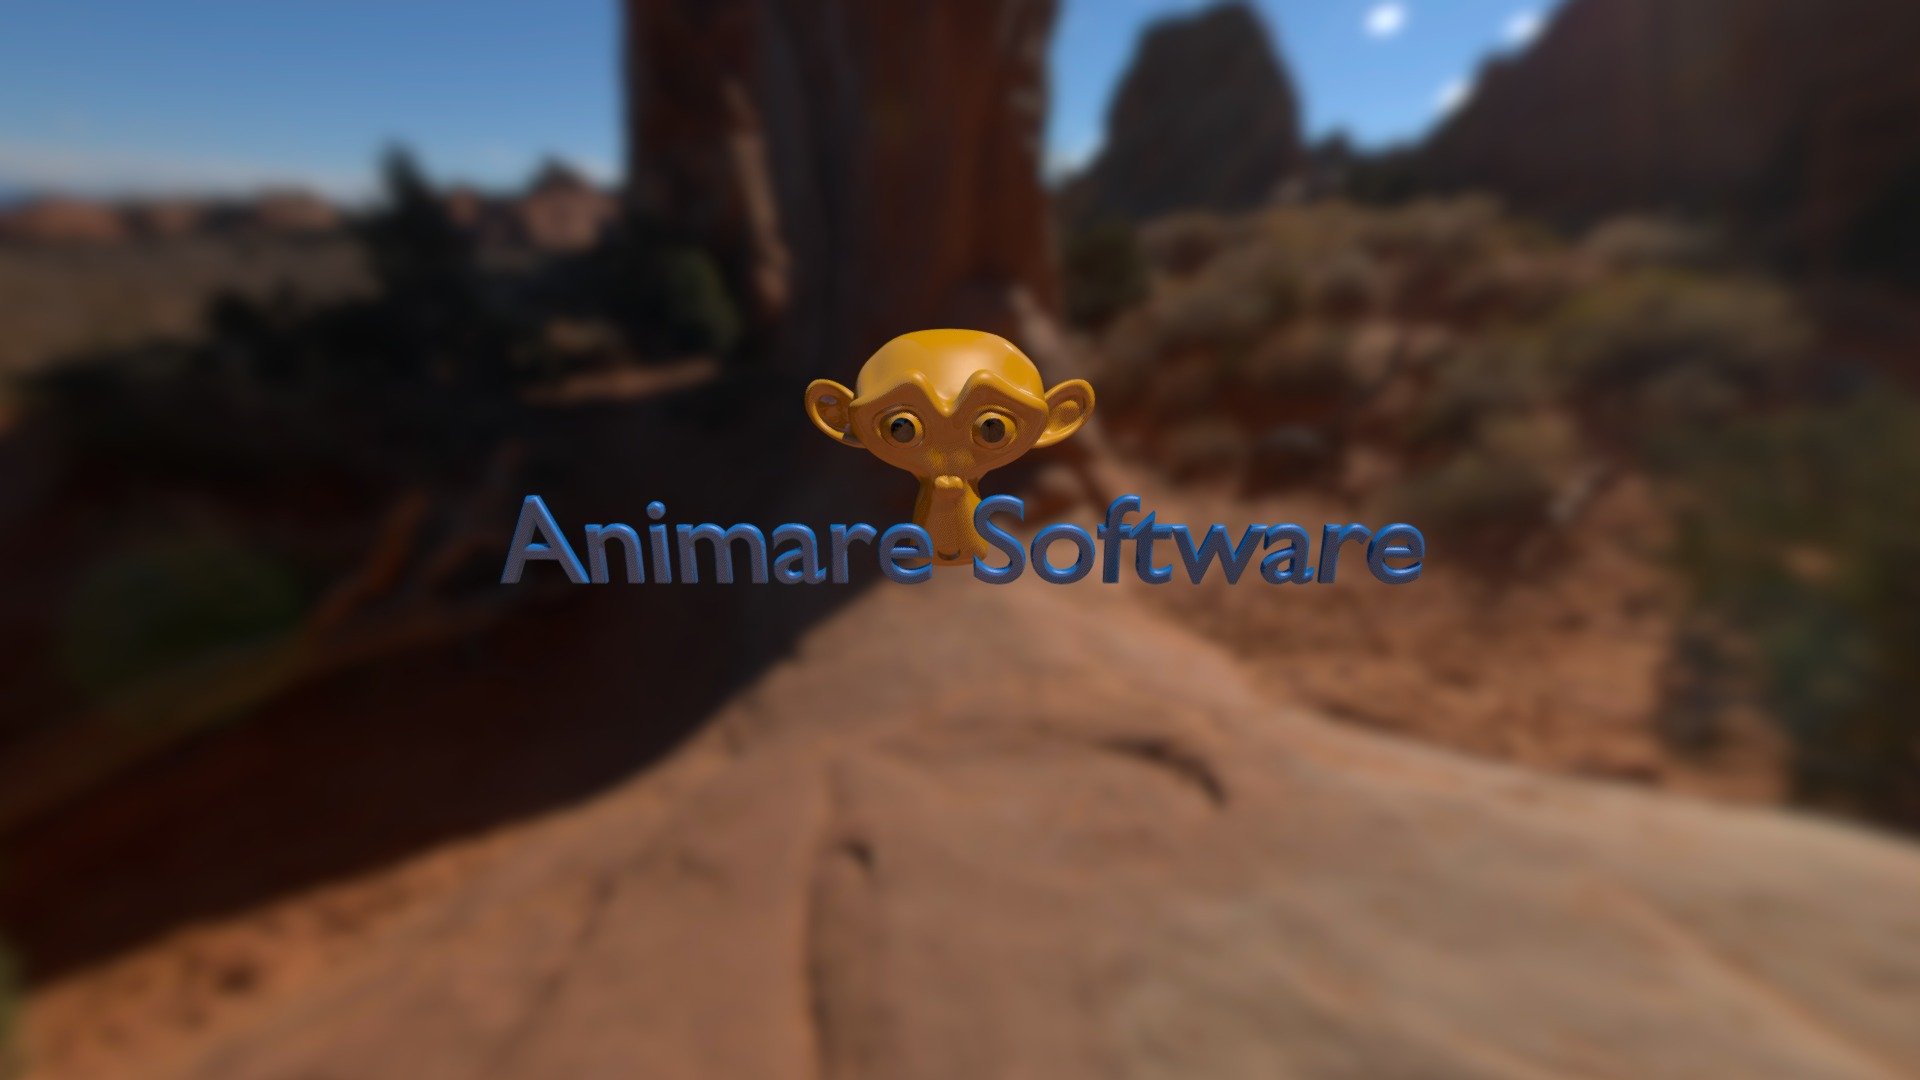 Animare Software